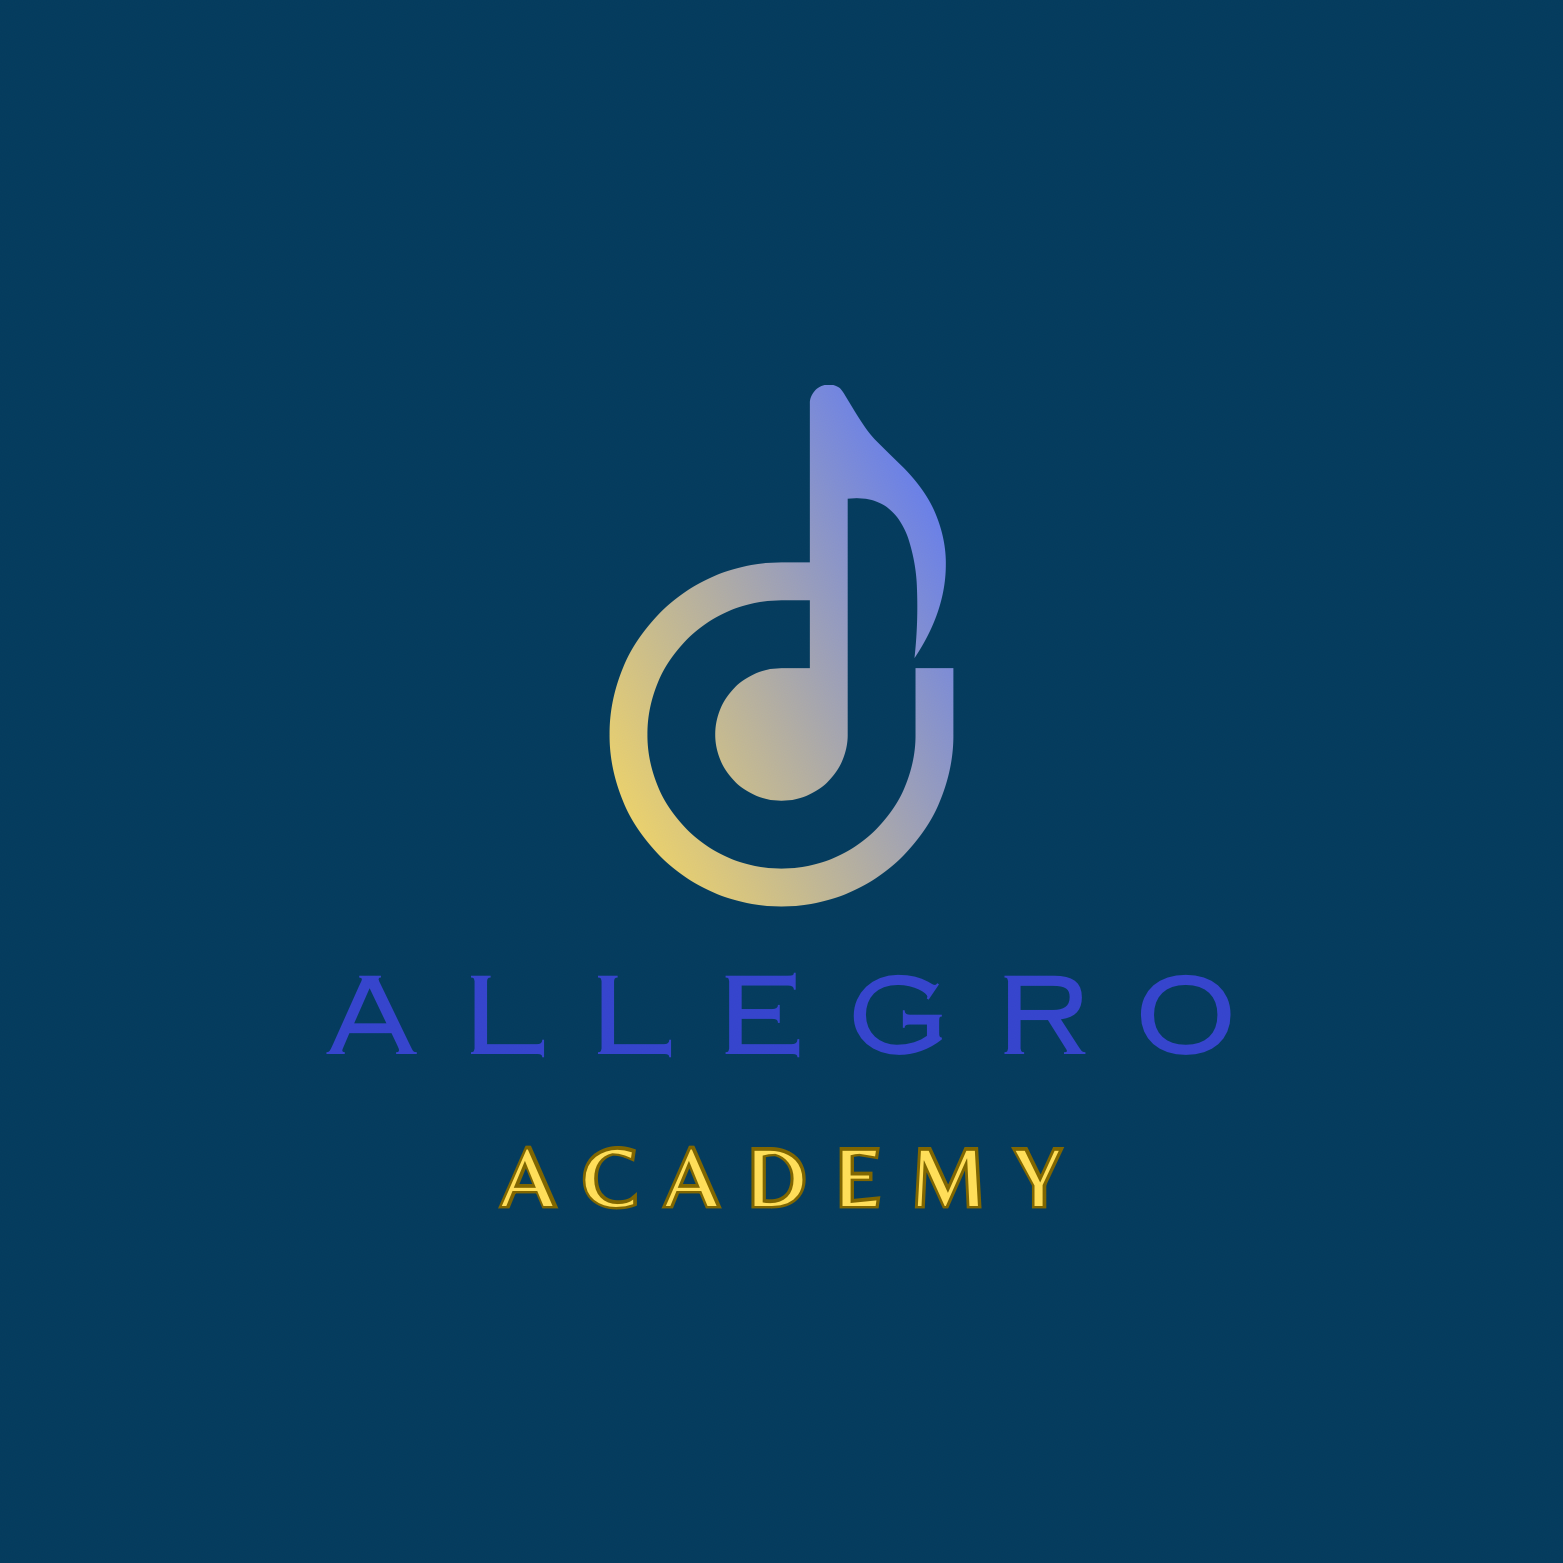 Allegro Academy